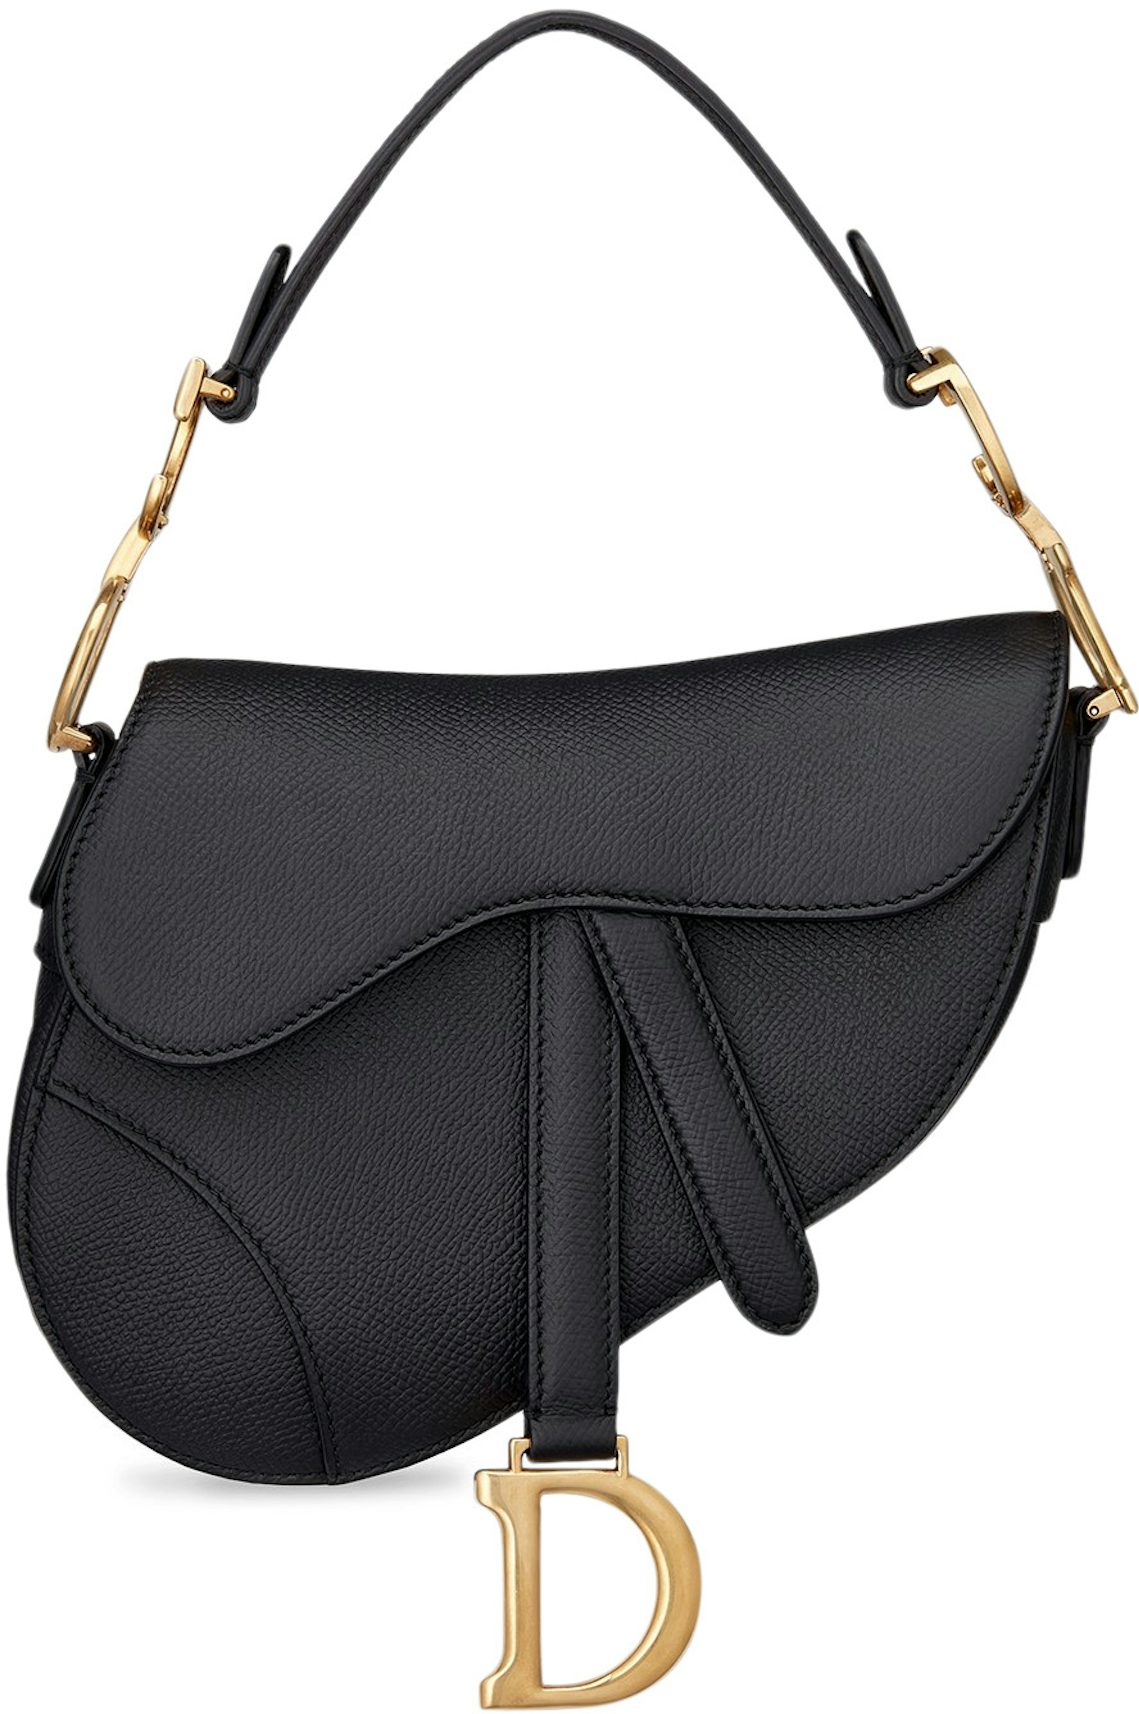 Dior Saddle Bag Calfskin Mini Black in Embossed Calfskin with Aged